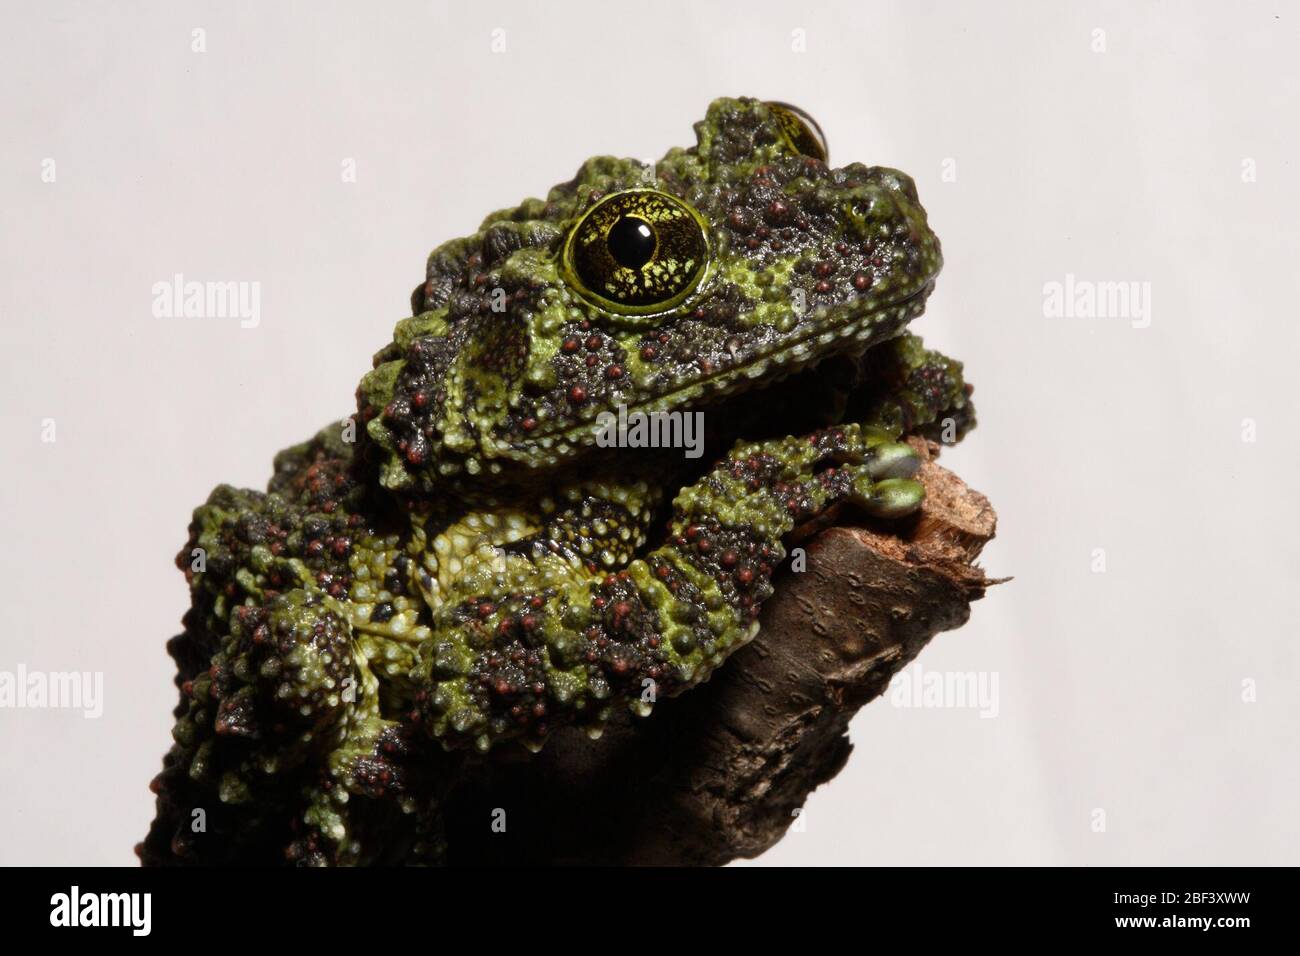 Vietnamese Mossy Frog. Species: corticale,Genus: Theloderma,Family: Rhacophoridae,Order: Anura,Class: Amphibia,Phylum: Chordata,Kingdom: Animalia,Amphibian Stock Photo